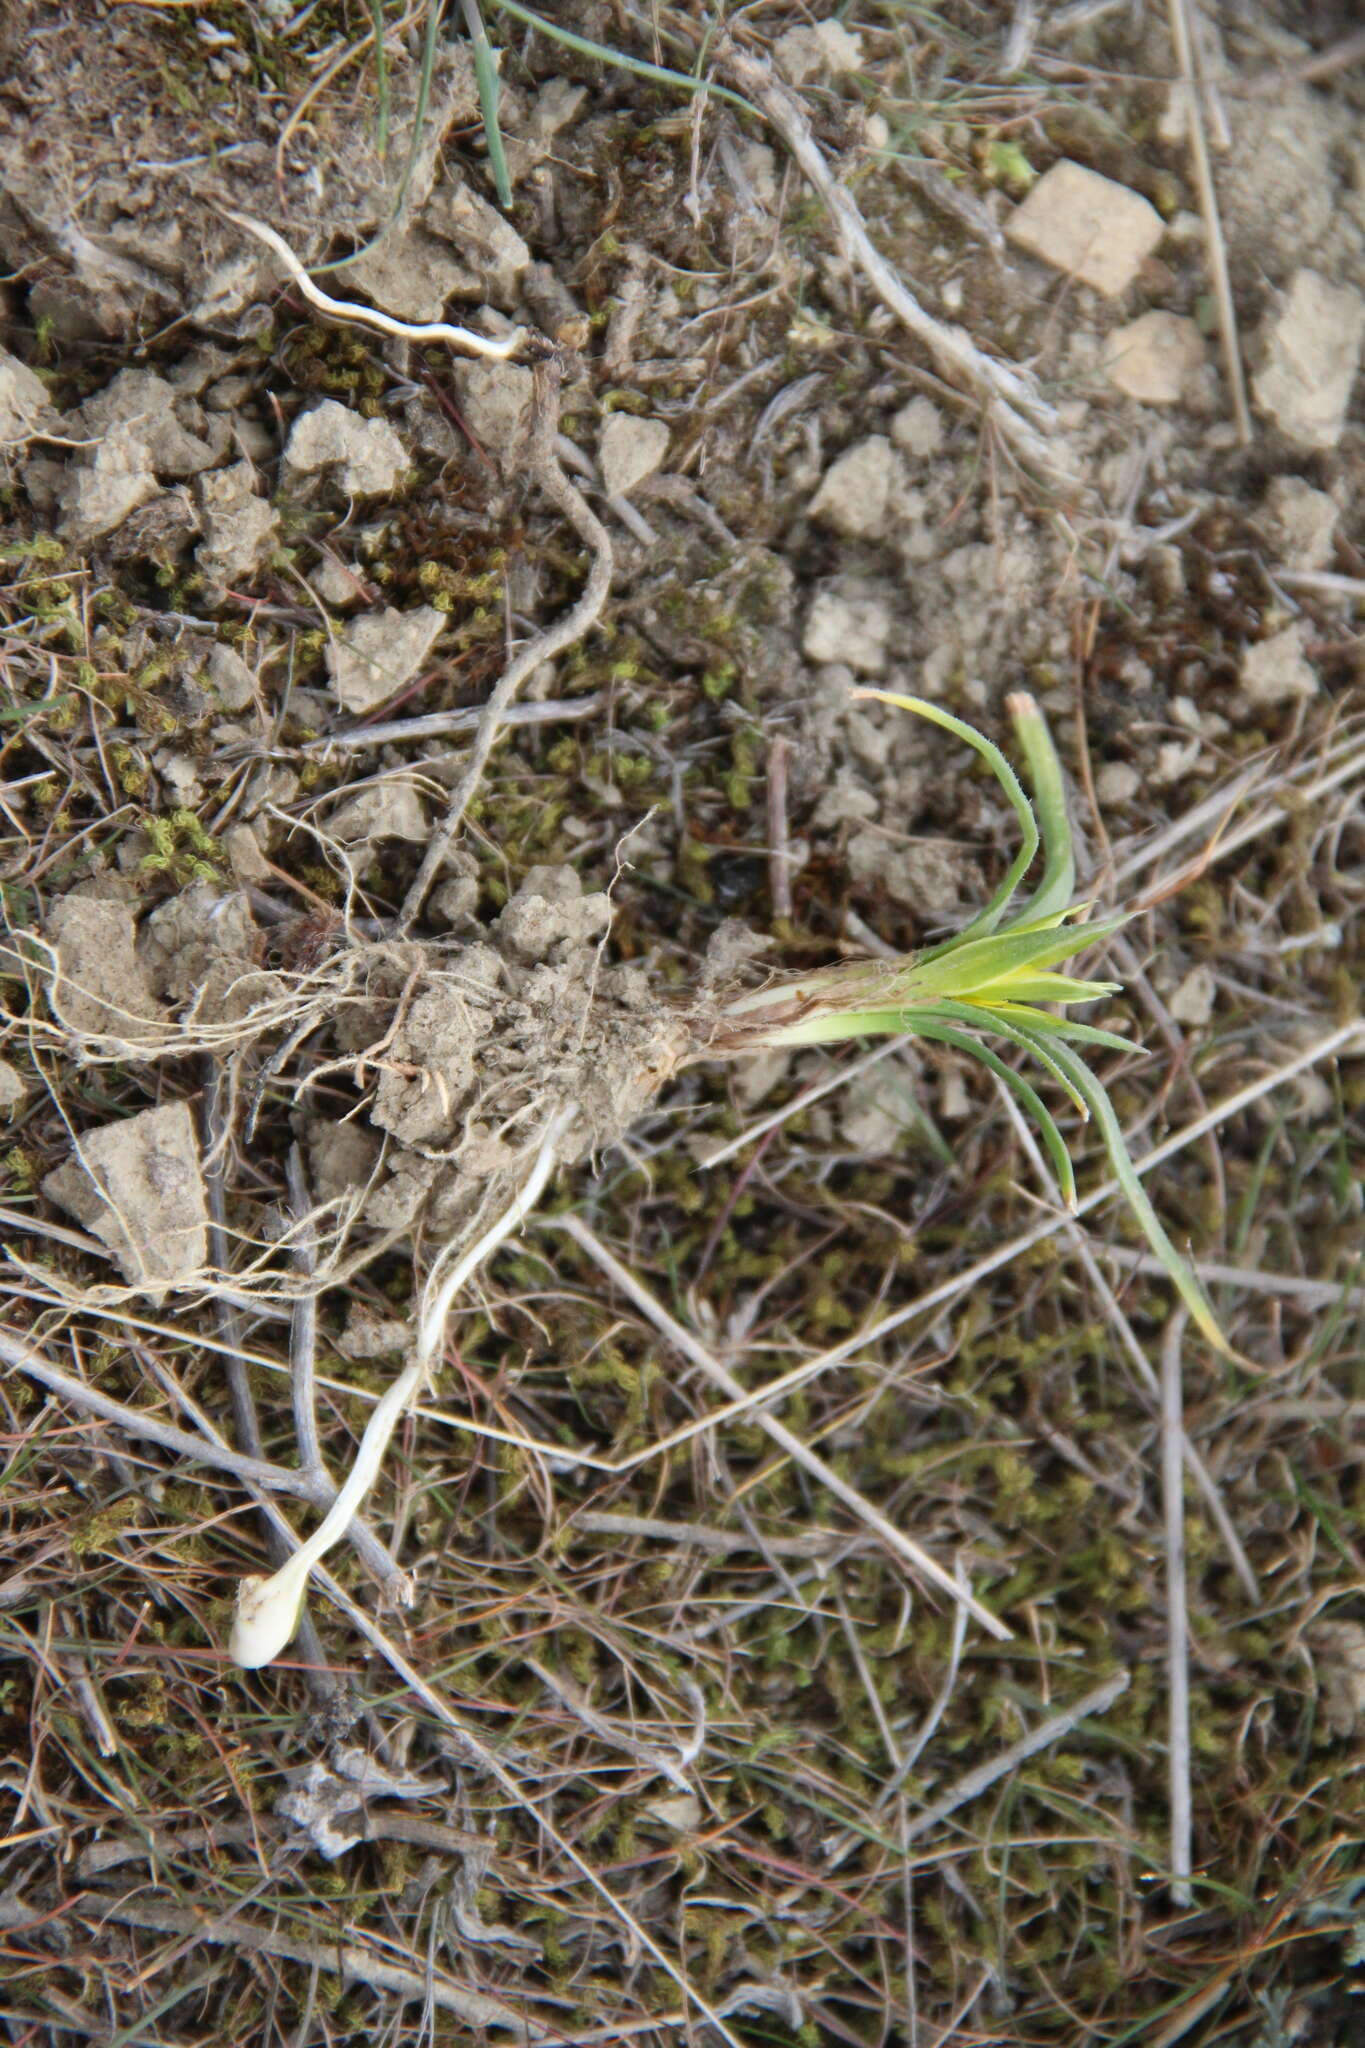 Image of Gagea reticulata (Pall.) Schult. & Schult. fil.